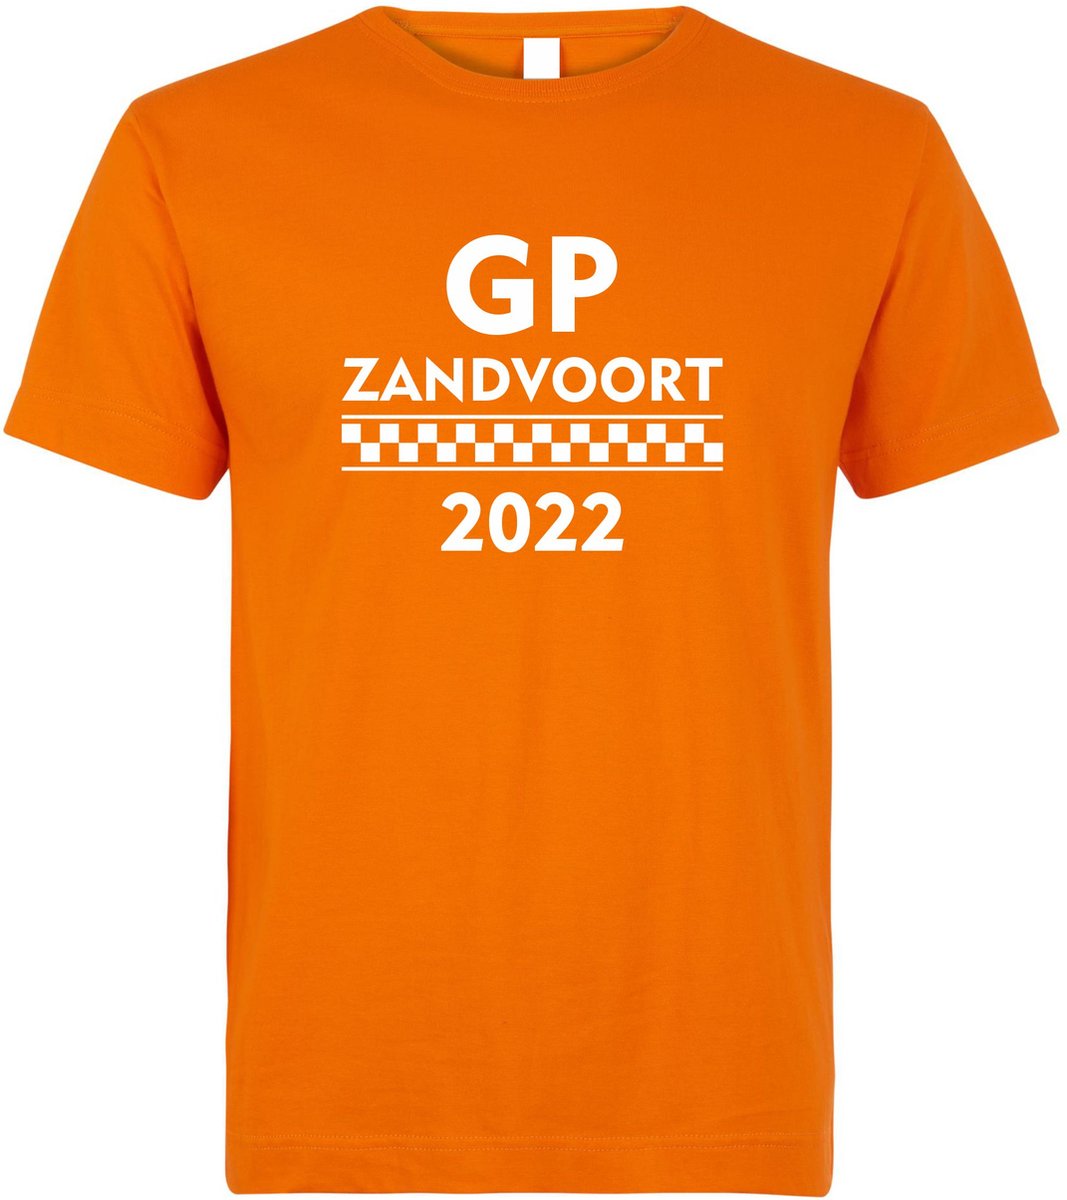 T-shirt GP Zandvoort 2022 | Max Verstappen / Red Bull Racing / Formule 1 fan | Grand Prix Circuit Zandvoort | kleding shirt | Oranje | maat S